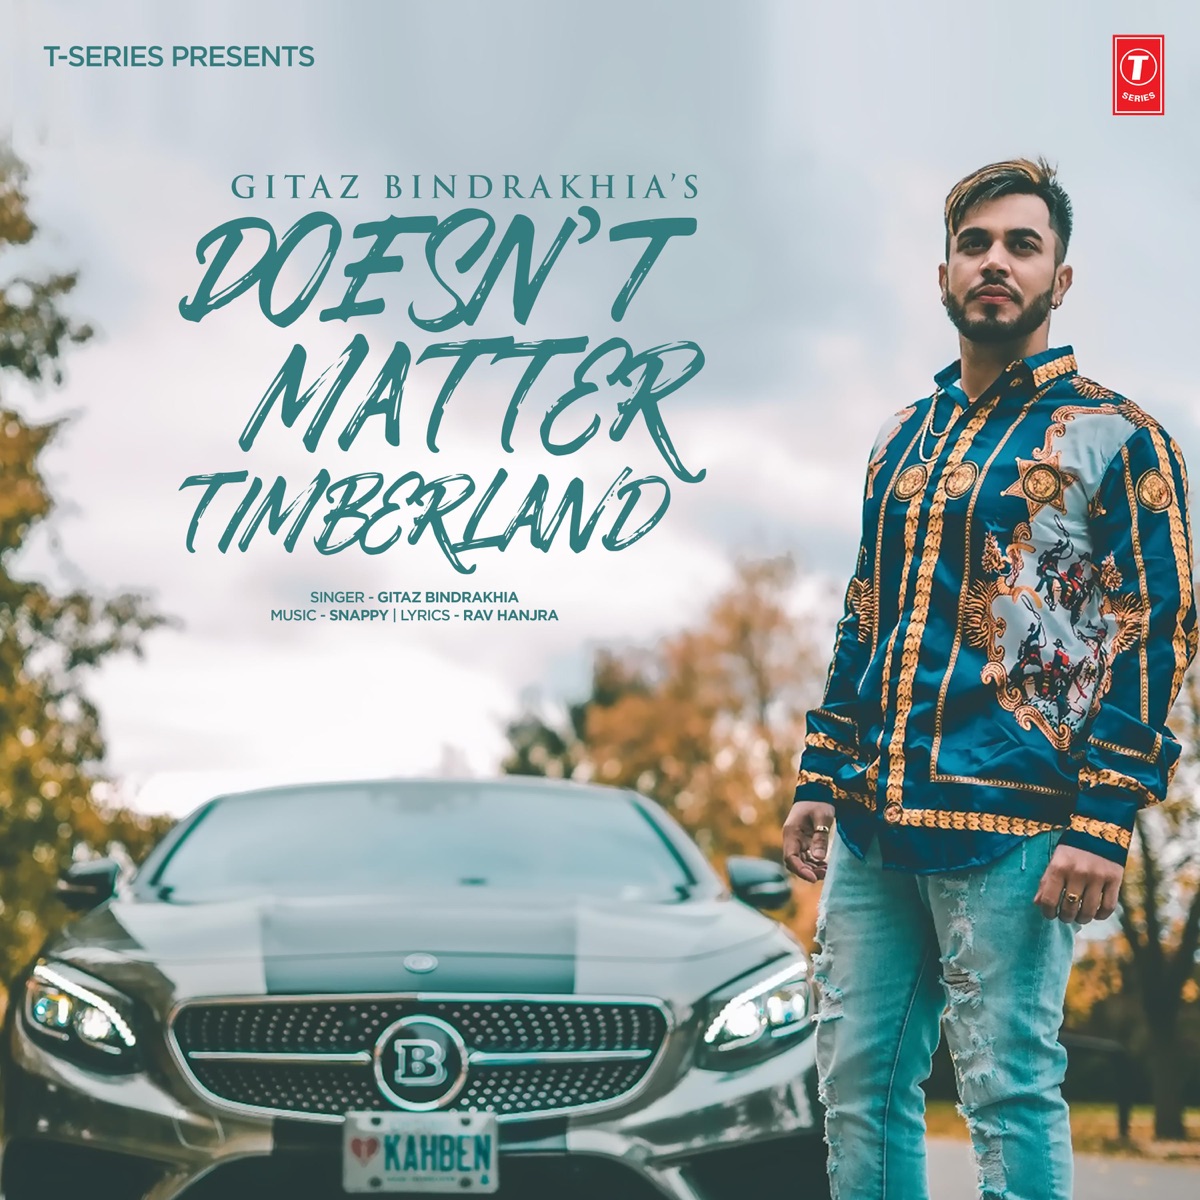 Doesn't Matter - Timberland - Single - Album by Gitaz Bindrakhia & Snappy -  Apple Music